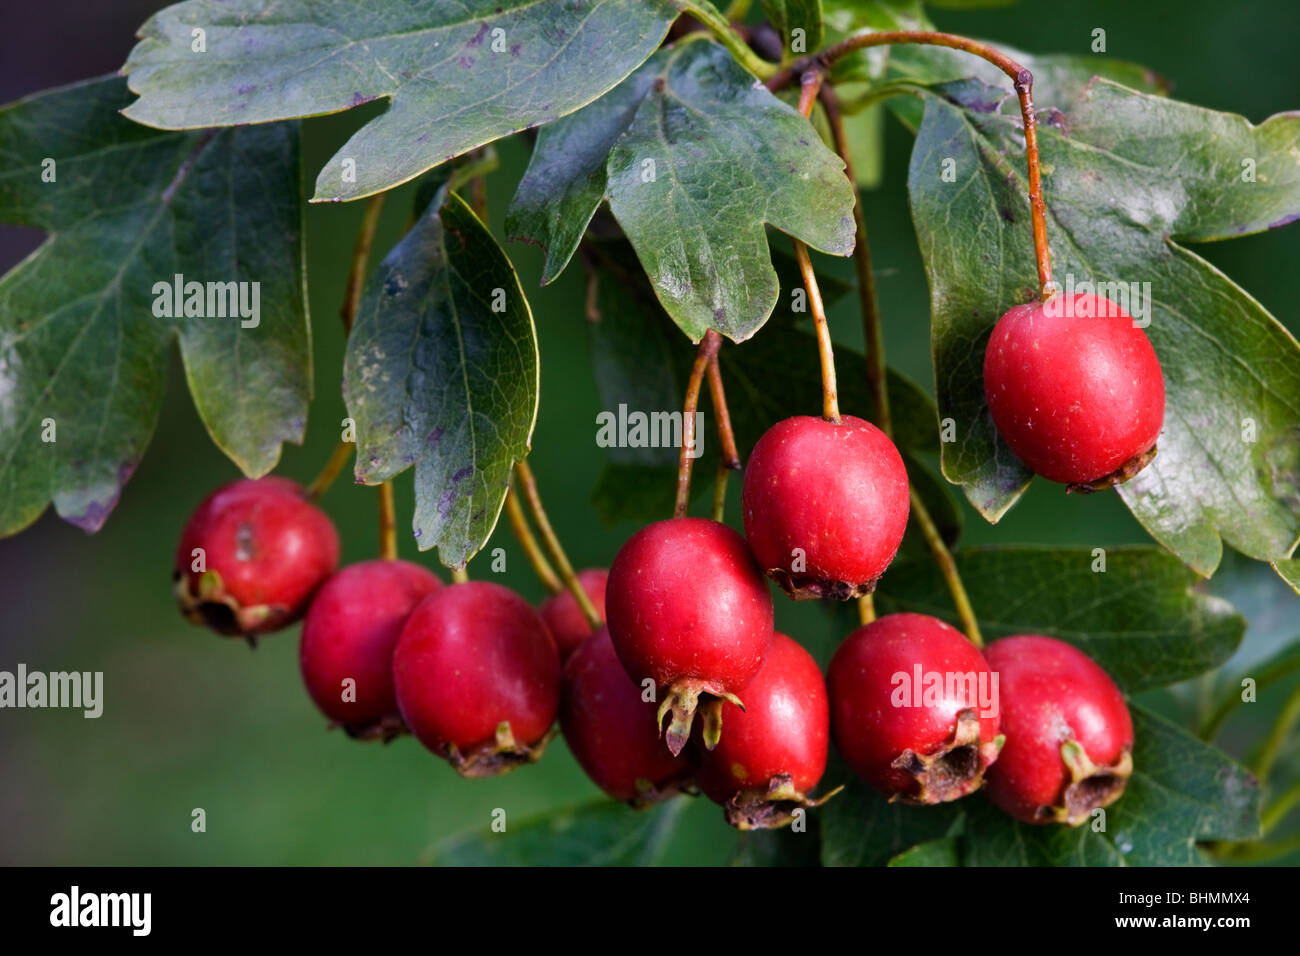 Common Hawthorn (Crataegus monogyna) showing leaves and red berries, Belgium Stock Photo